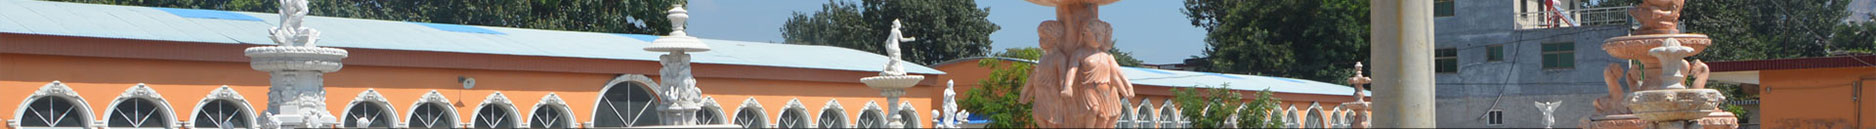 Luxurious Marble Statuary Water Fountain Garden Decor for Sale MOKK-882